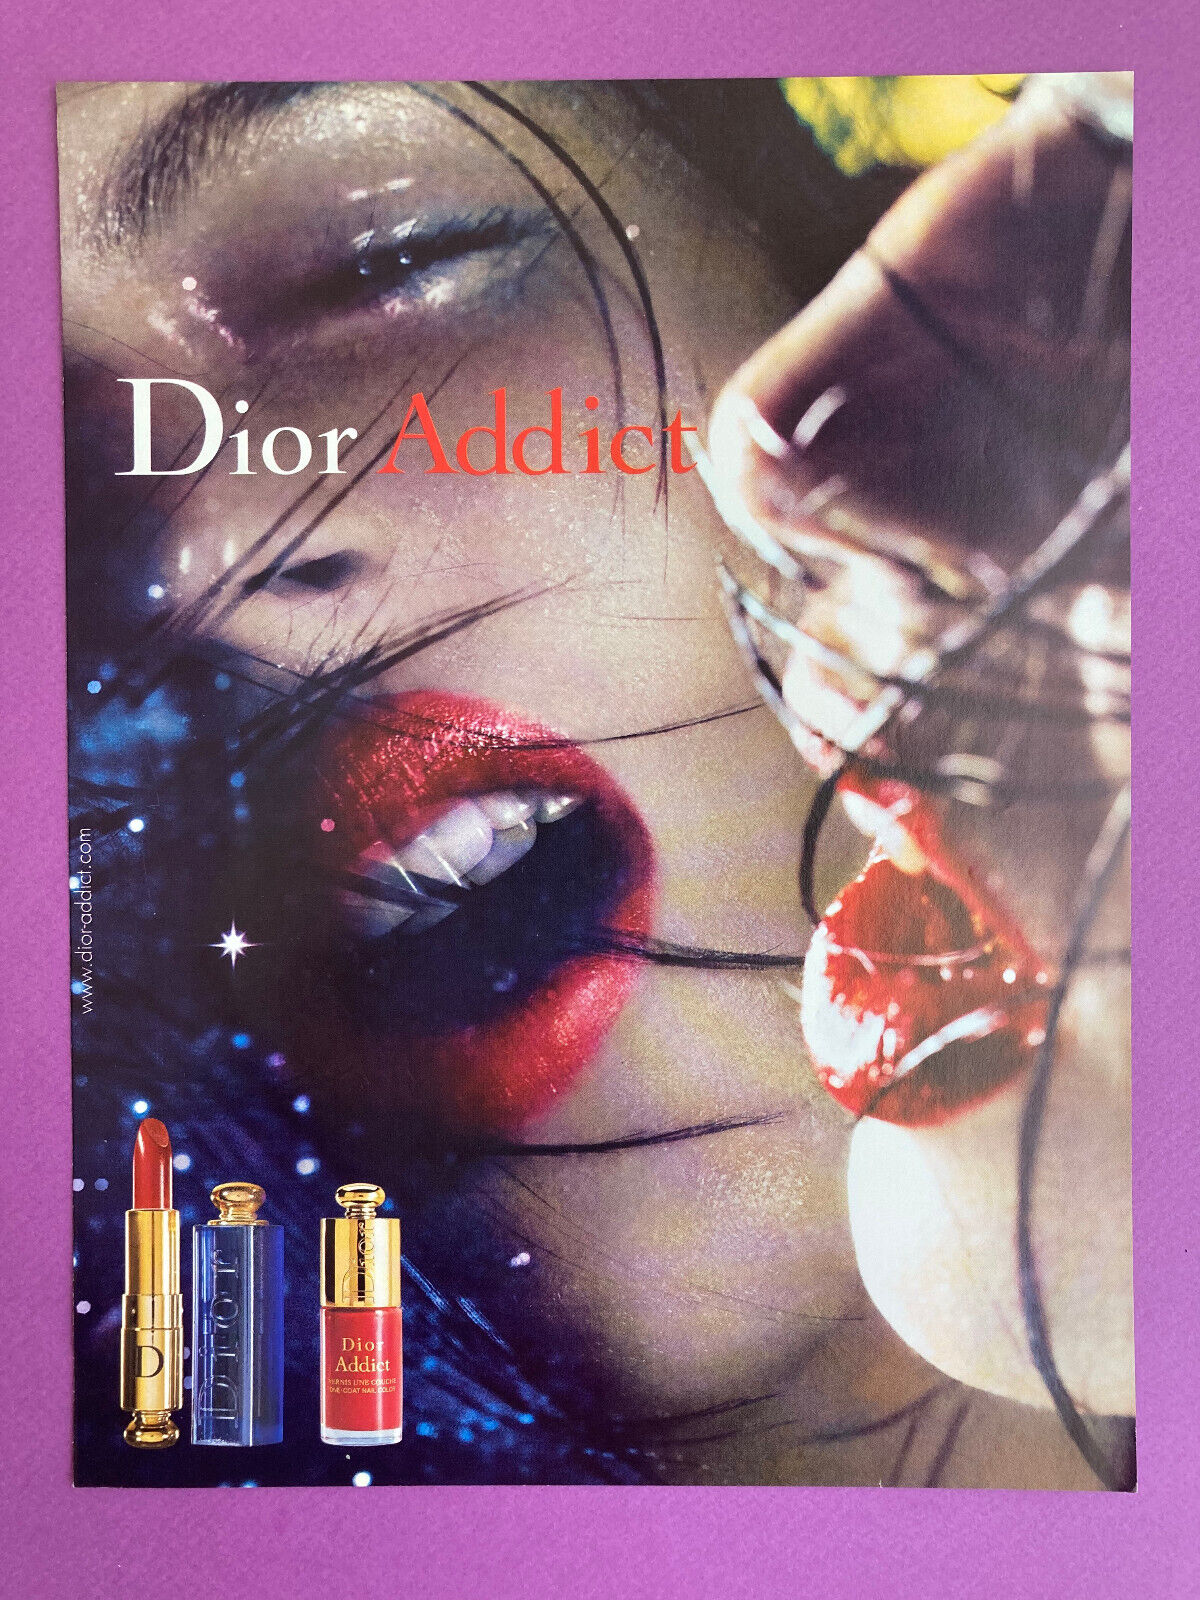 2002 Christian Dior Beauty Makeup Advertising Vintage Lipstick Fashion Addict